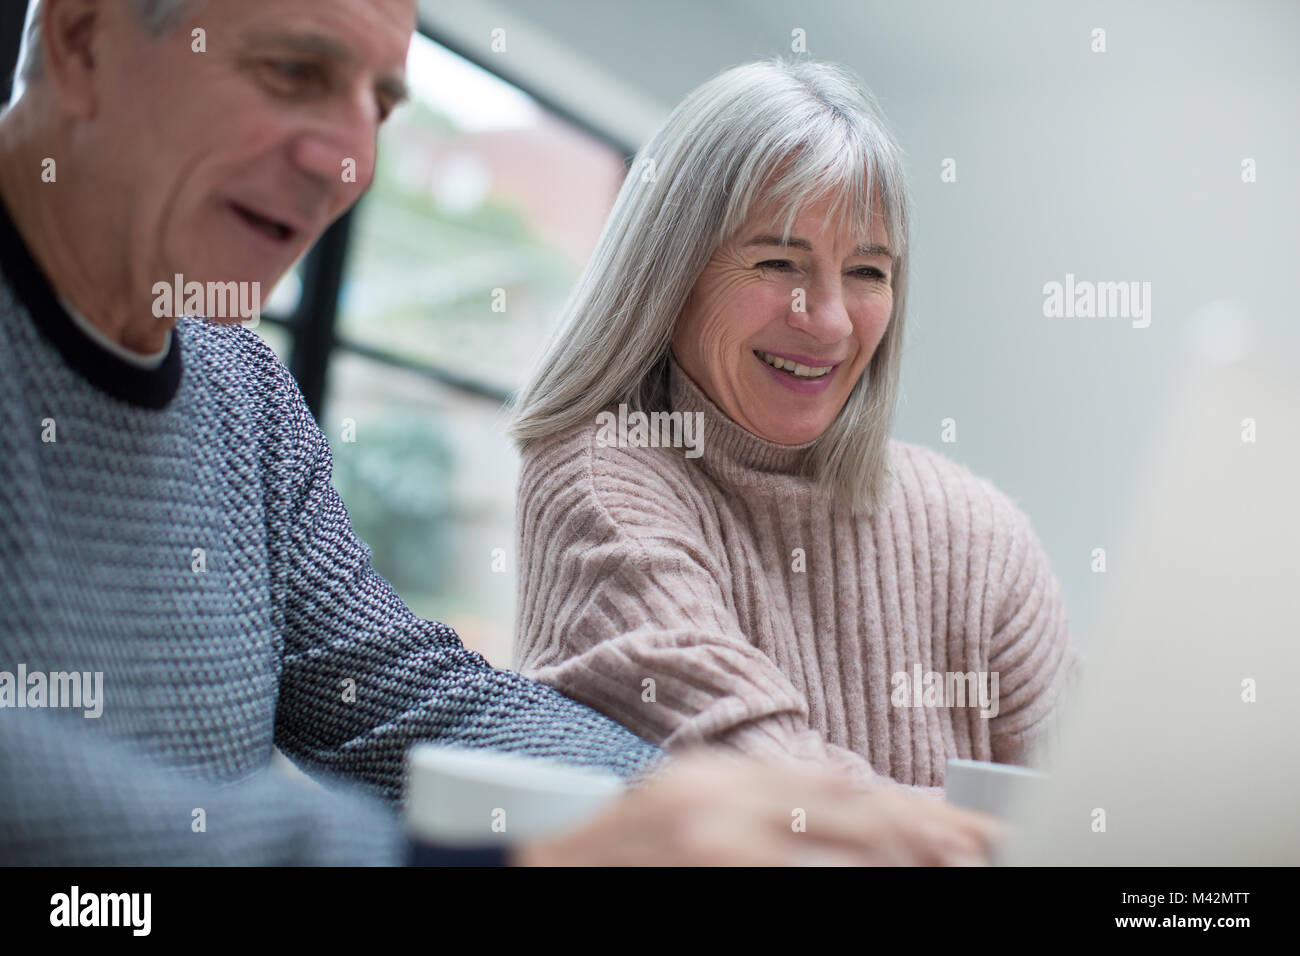 Senior couple using a laptop together Stock Photo